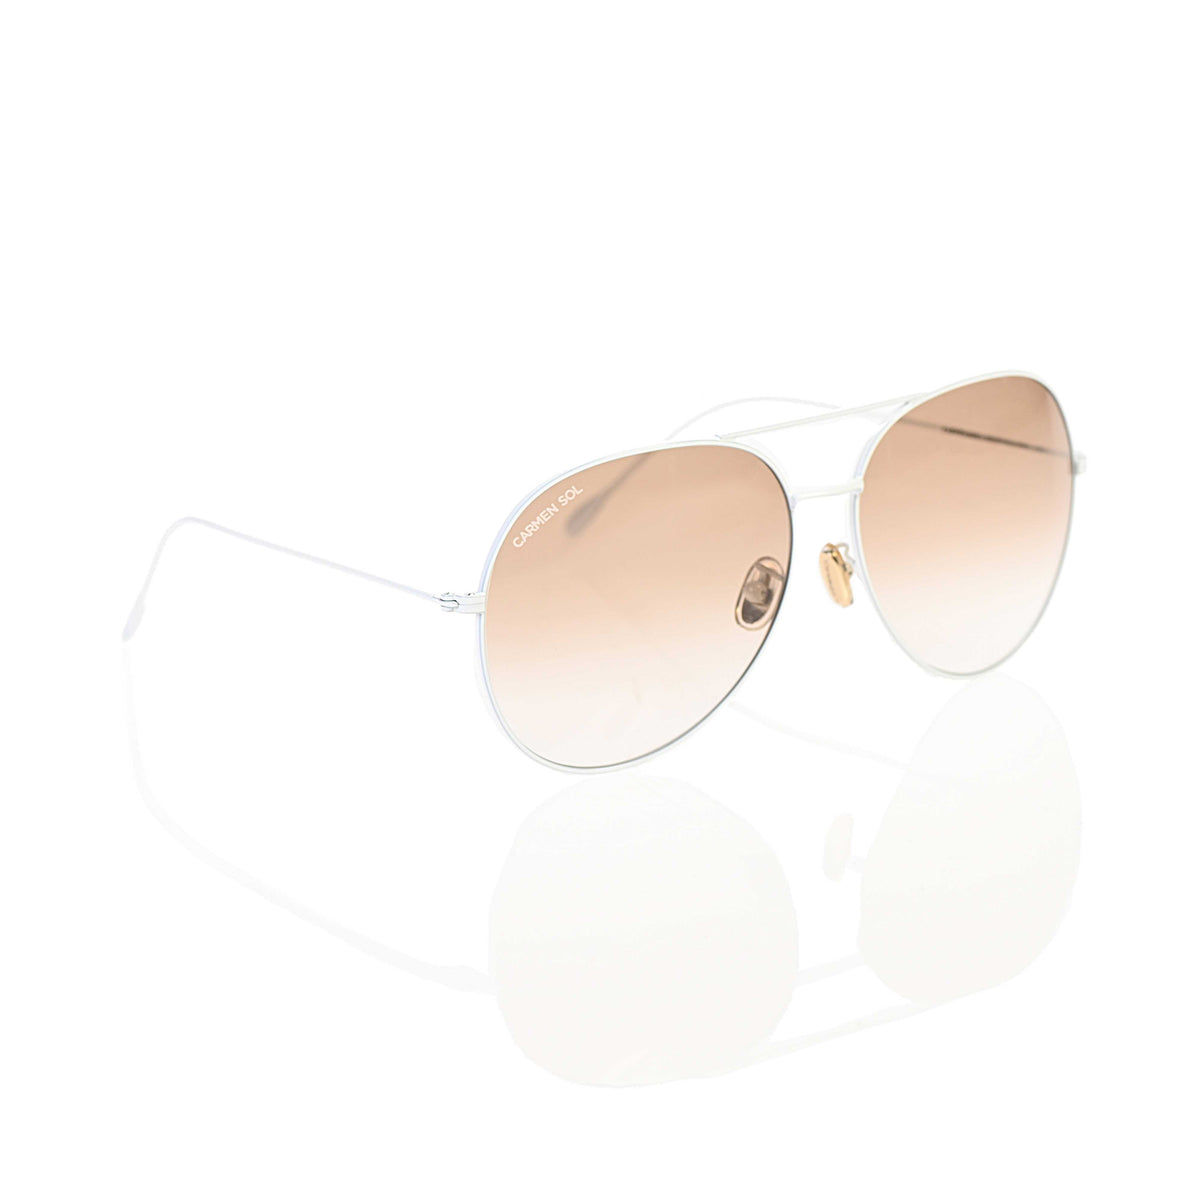 Caremen sol white aviators, women sunglasses from carmen sol harmonious blend of design.